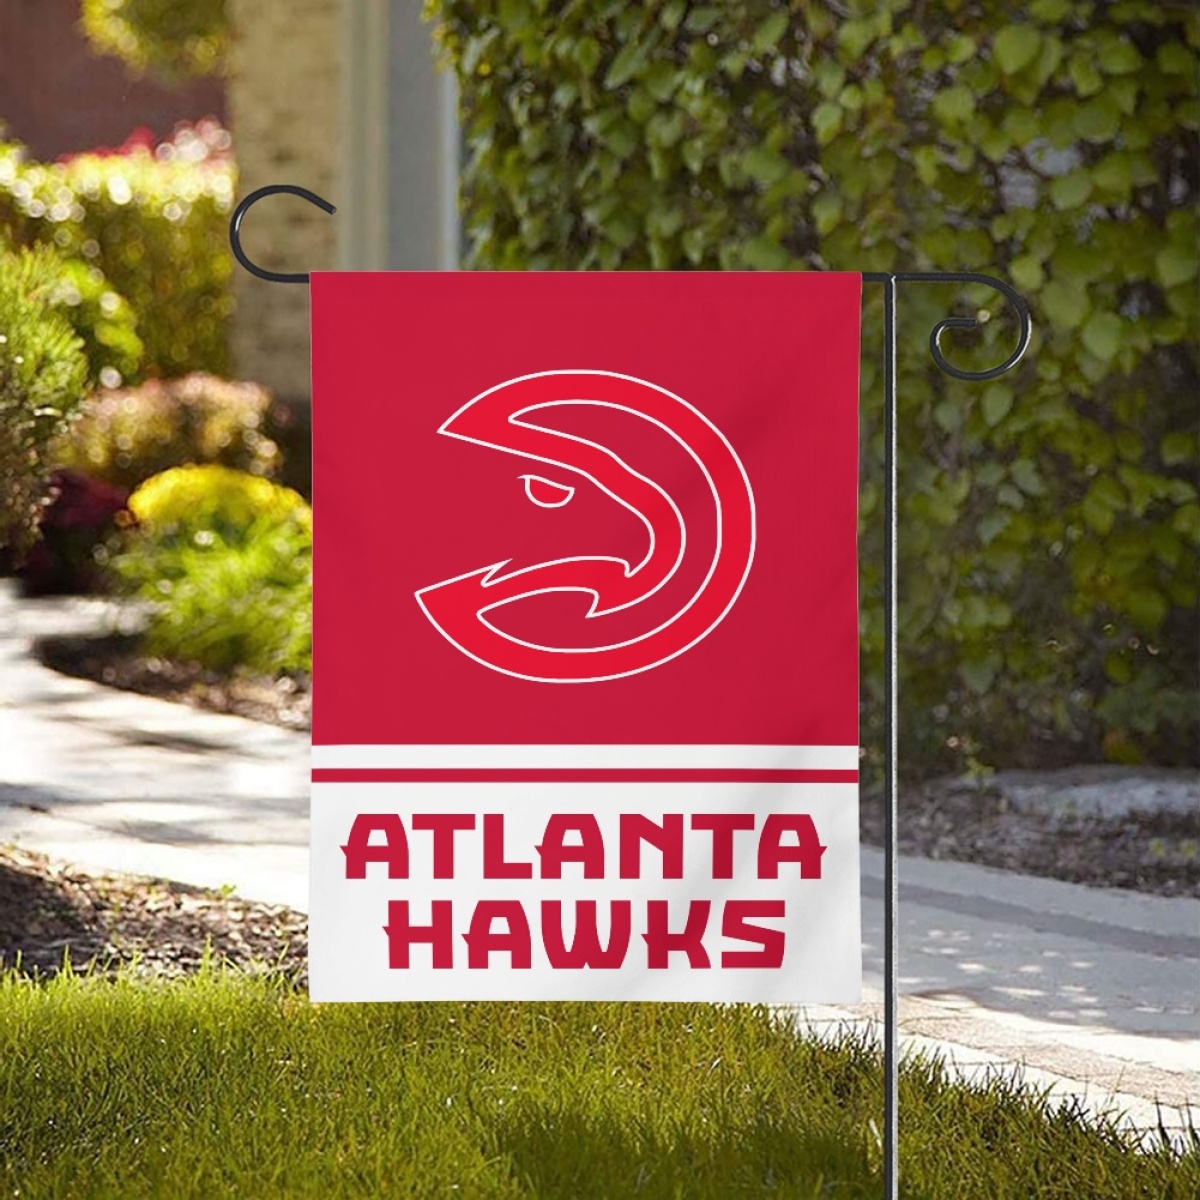 Atlanta Hawks Double-Sided Garden Flag 001 (Pls check description for details)